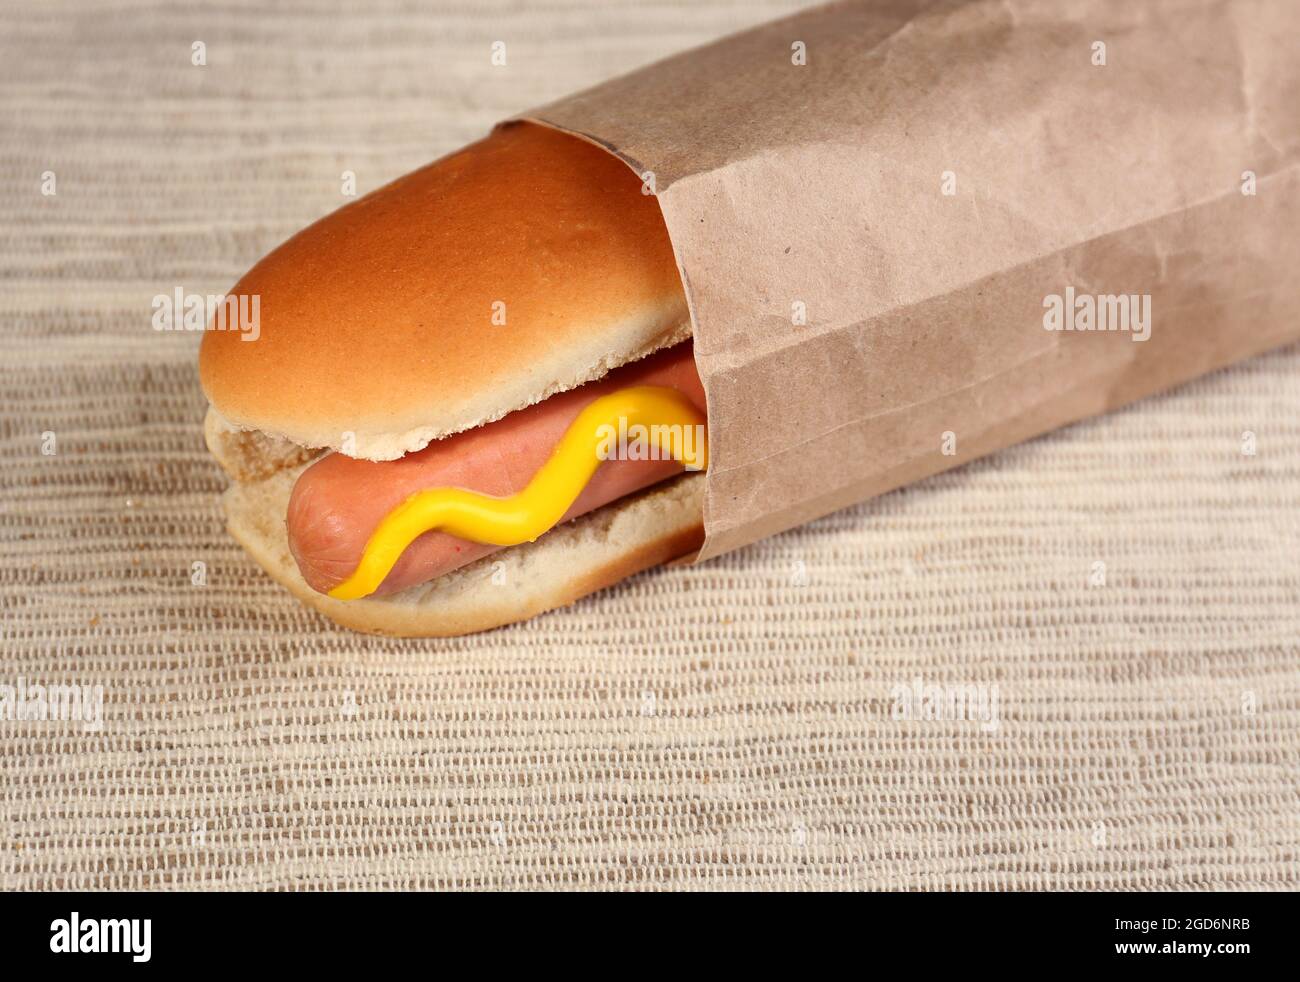 Leckerer Hot Dog auf Papier Stockfotografie - Alamy